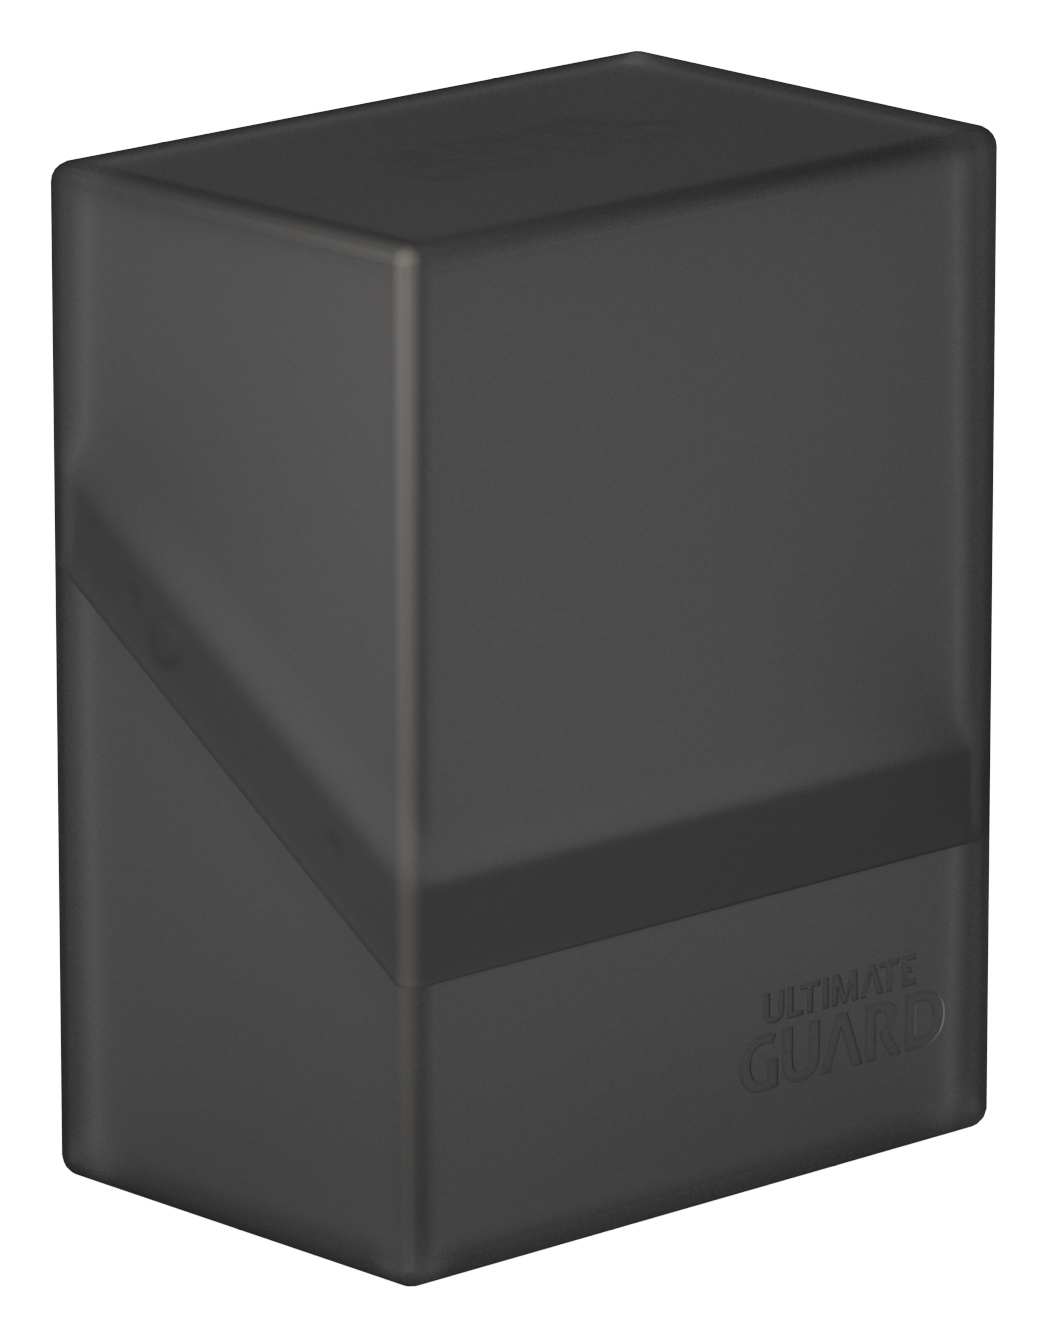 ULTIMATE GUARD BOULDER AMETHYST Standard Size DECK CASE 80 NEW Card Storage Box 